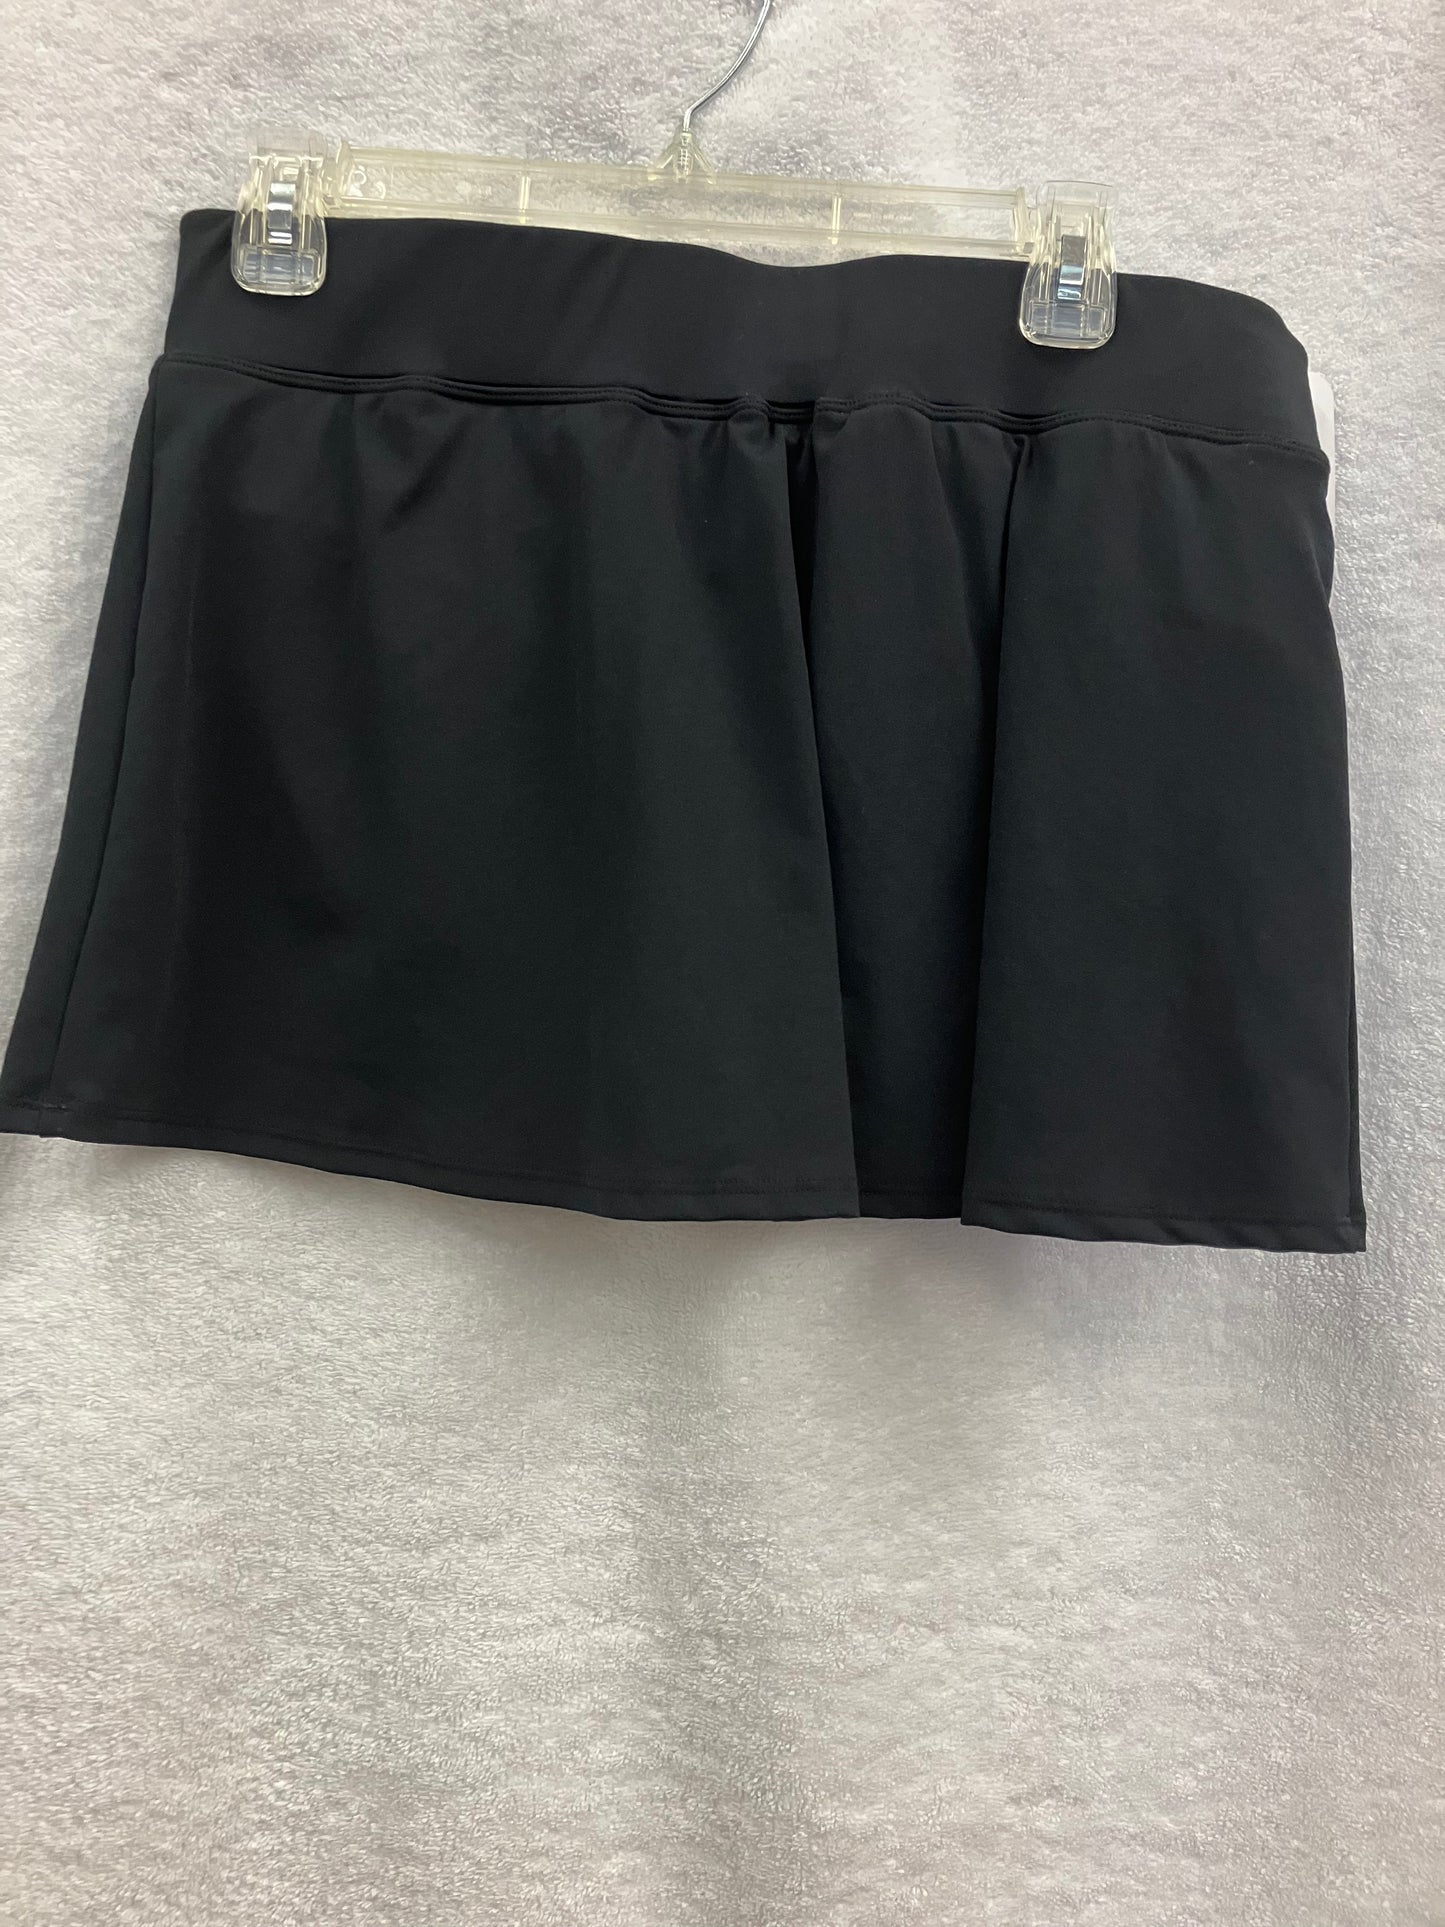 Dolfin Aquatic Fitness Solid Black Skirt Size 14